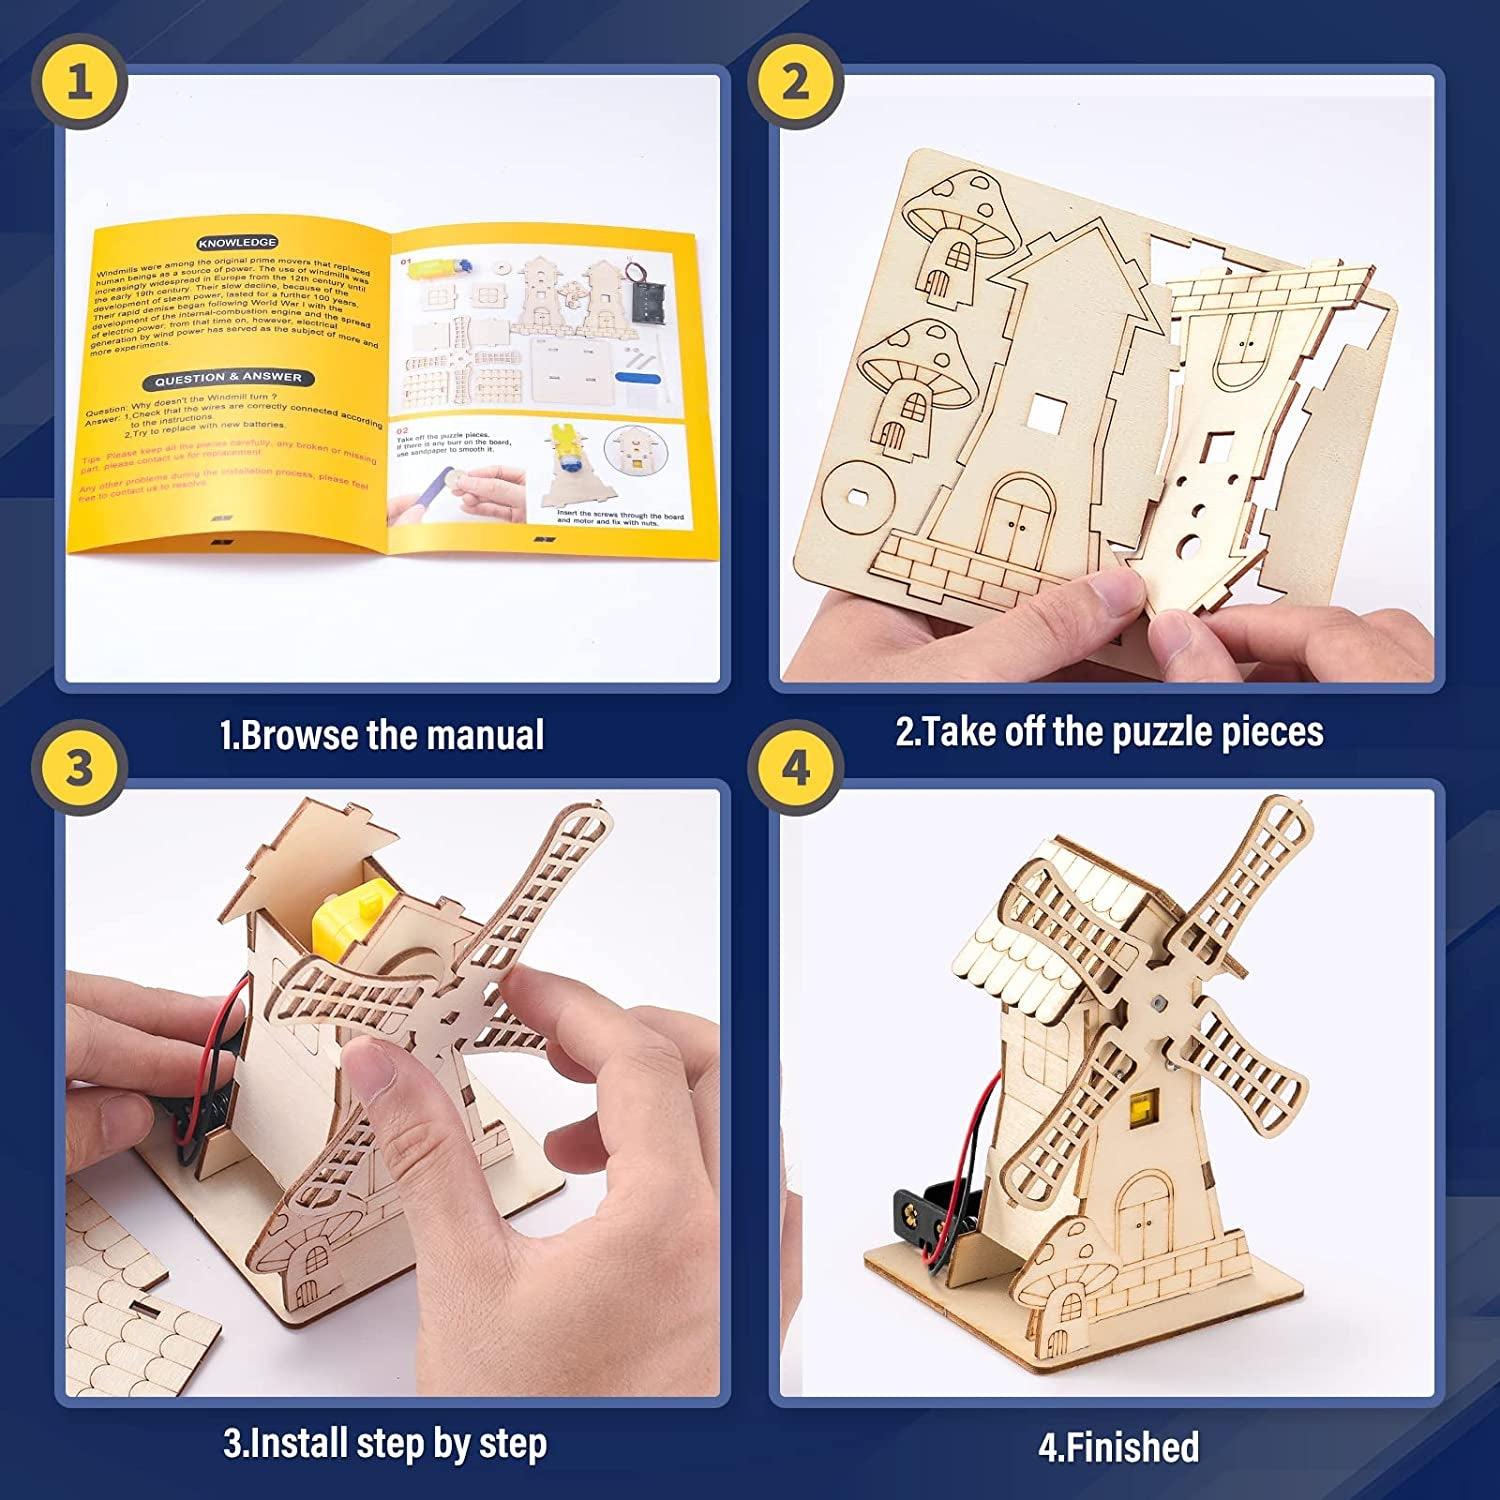 ORIVAST orivast stem kit 3d wooden puzzles, 4 set wood model building kits  for kids ages 8-12, educational engineering science projec